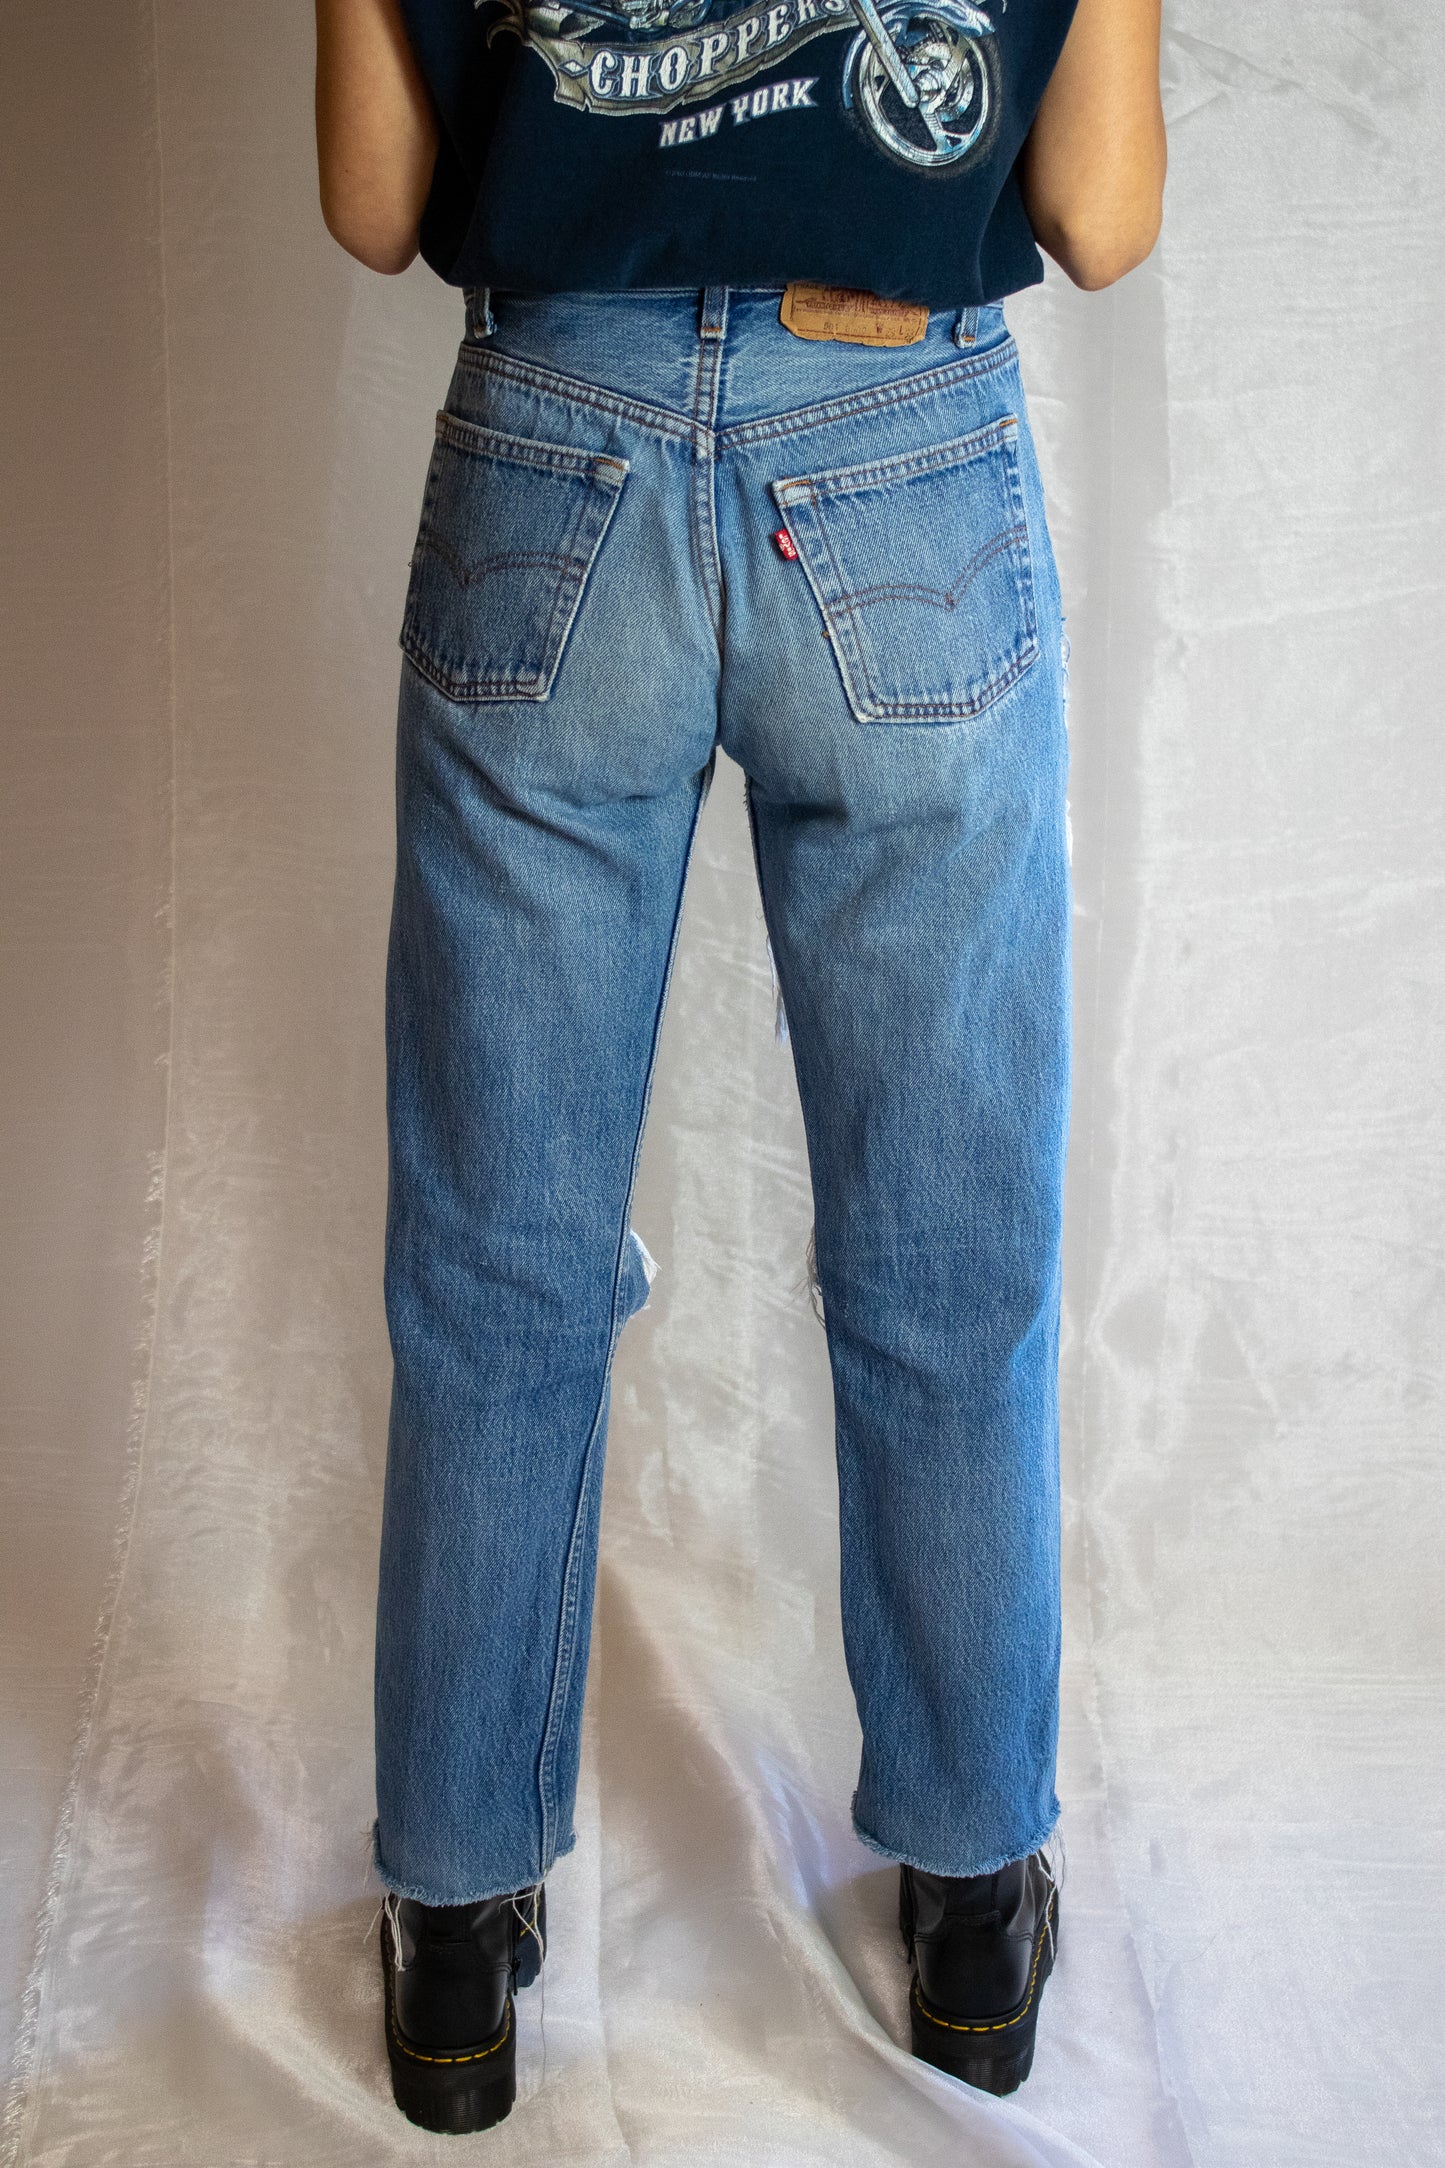 501 Levi's Medium Wash Distressed Jeans - 26x27